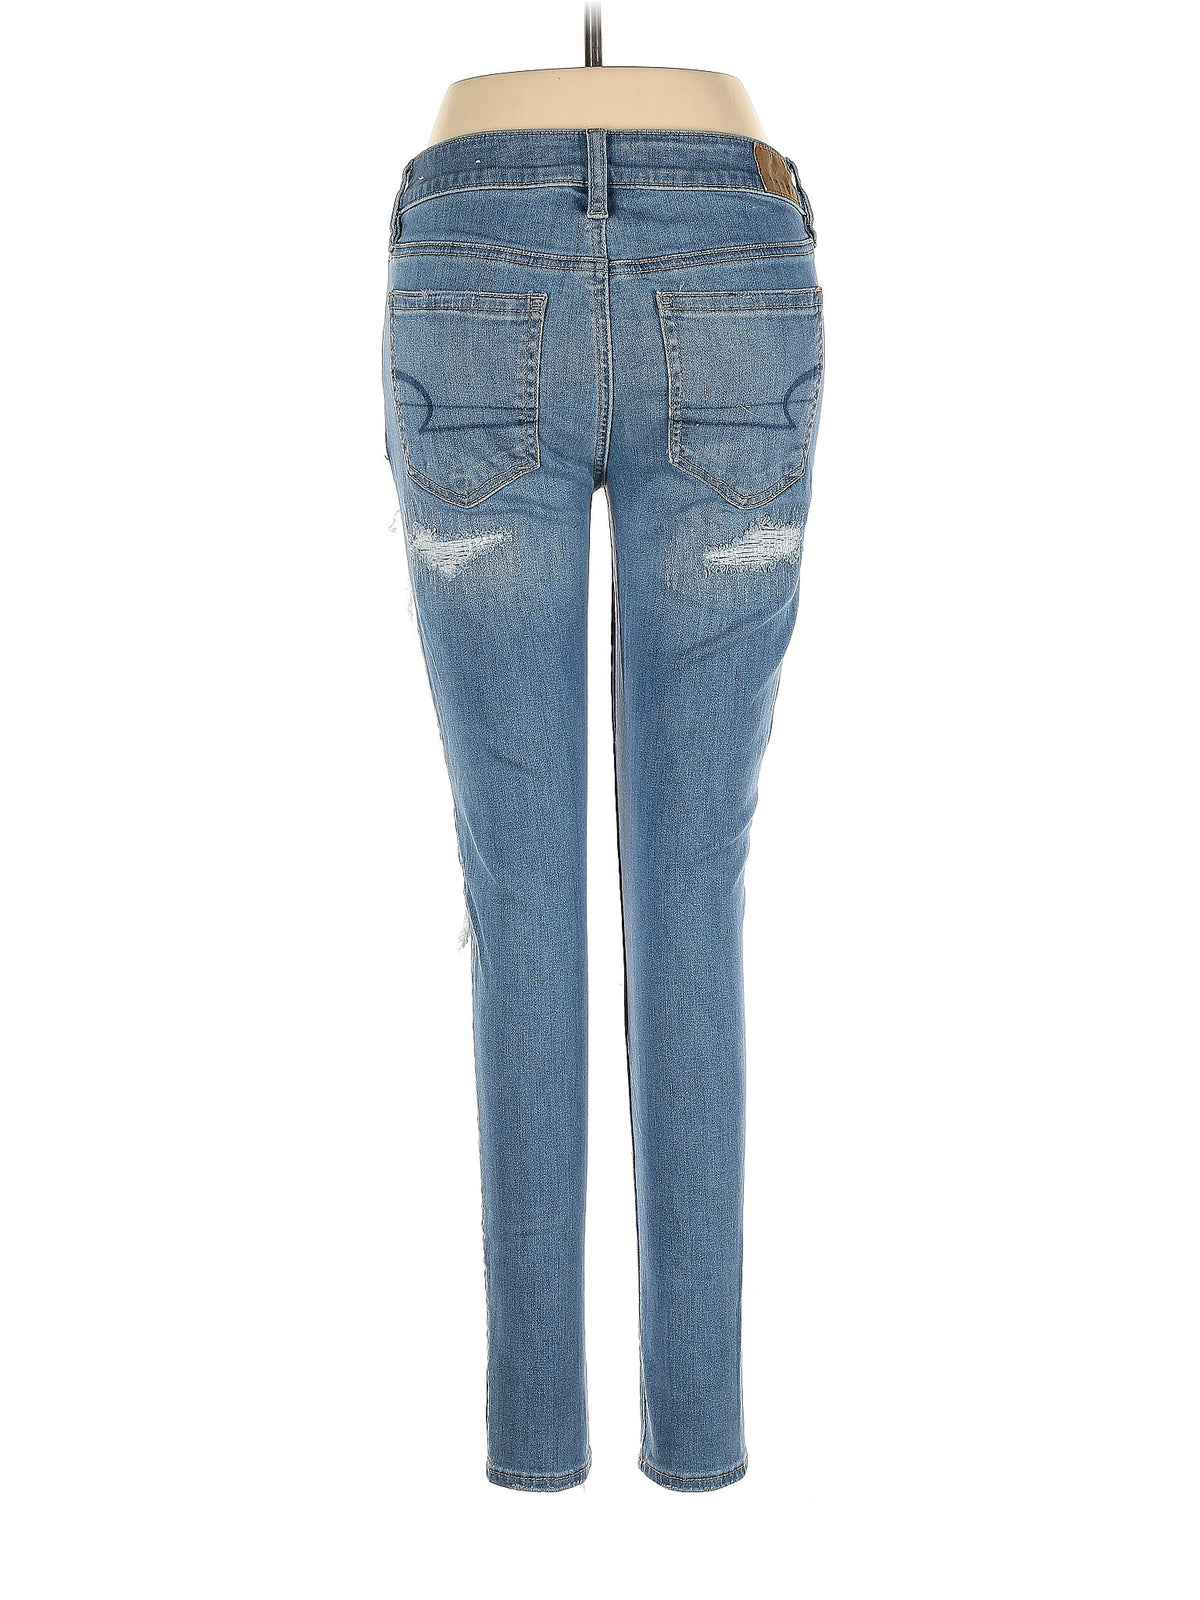 Jeans size - 4